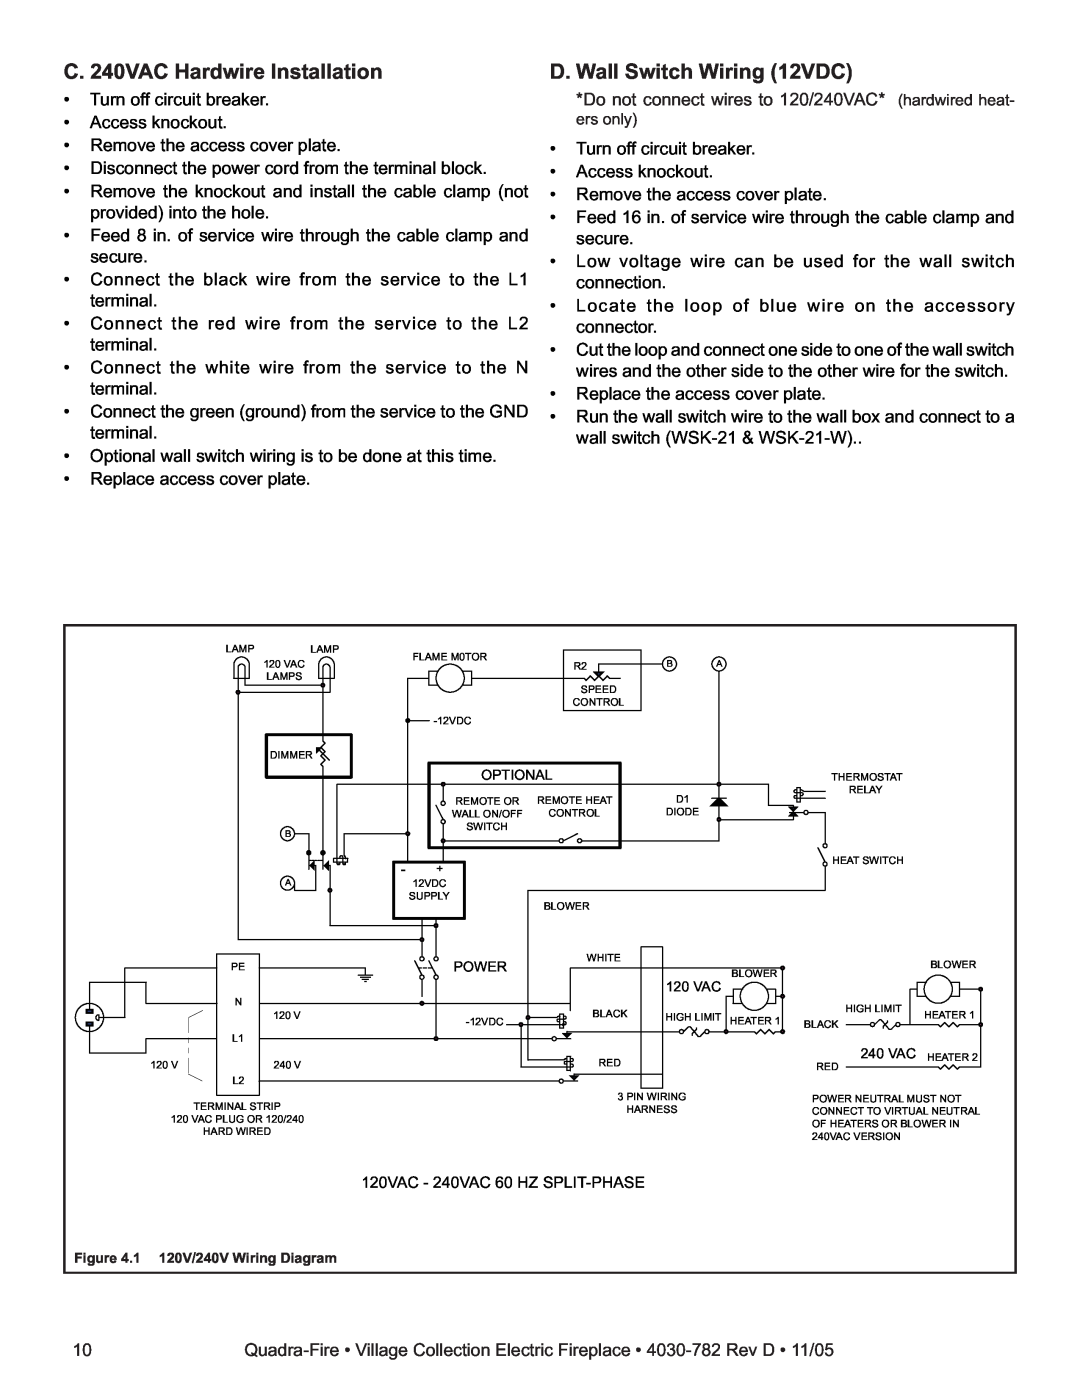 Quadra-Fire QV32E-B, QV32EV-B owner manual C. 240VAC Hardwire Installation, D. Wall Switch Wiring 12VDC 